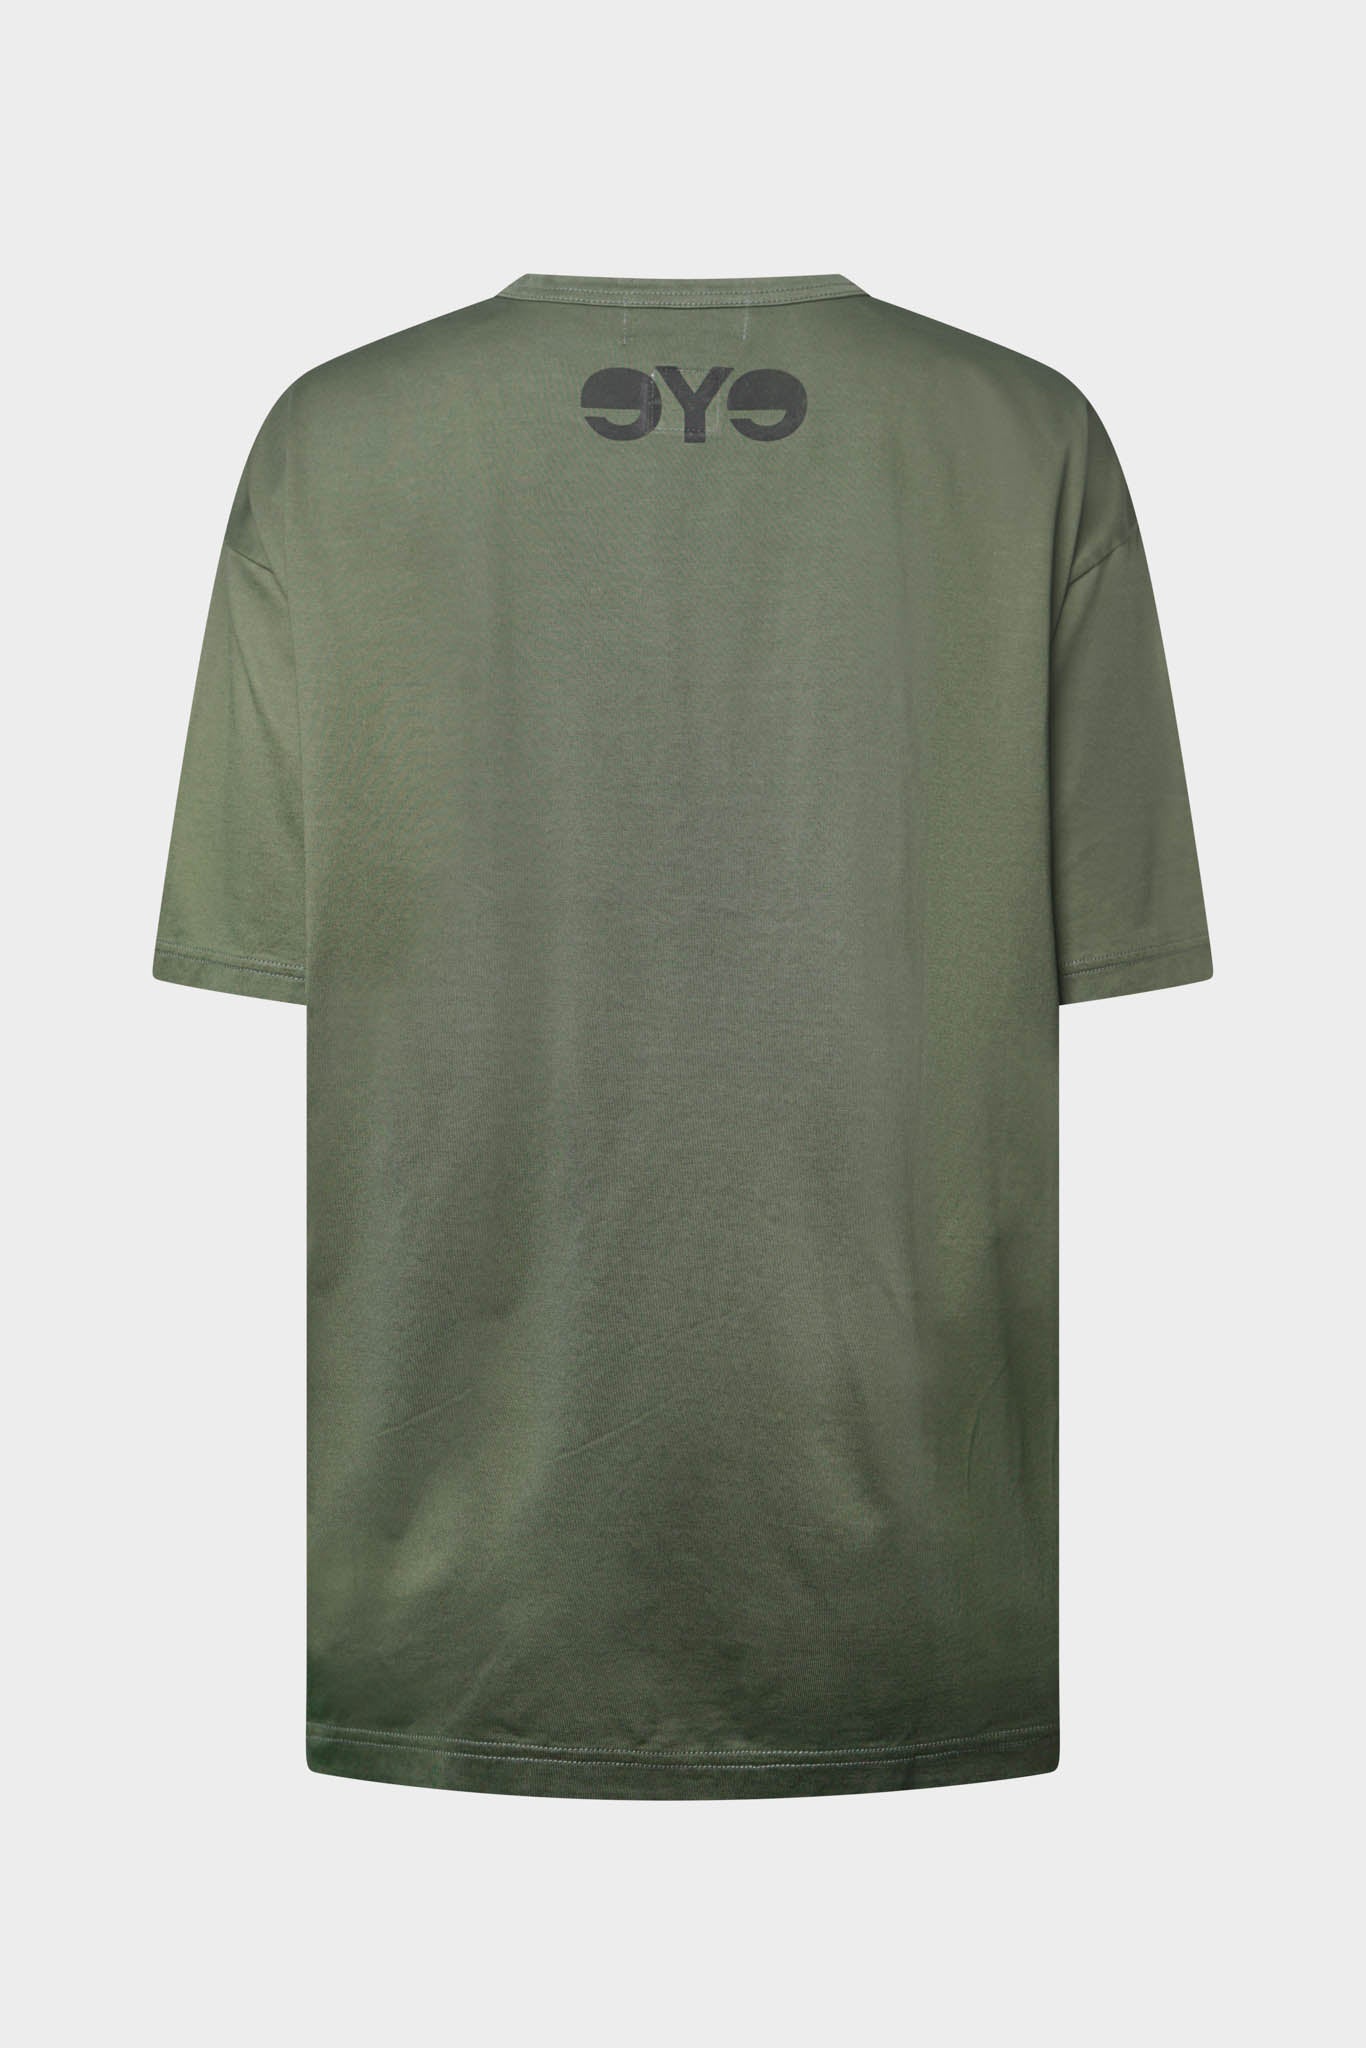 Selectshop FRAME - JUNYA WATANABE MAN T-Shirt T-Shirts Dubai